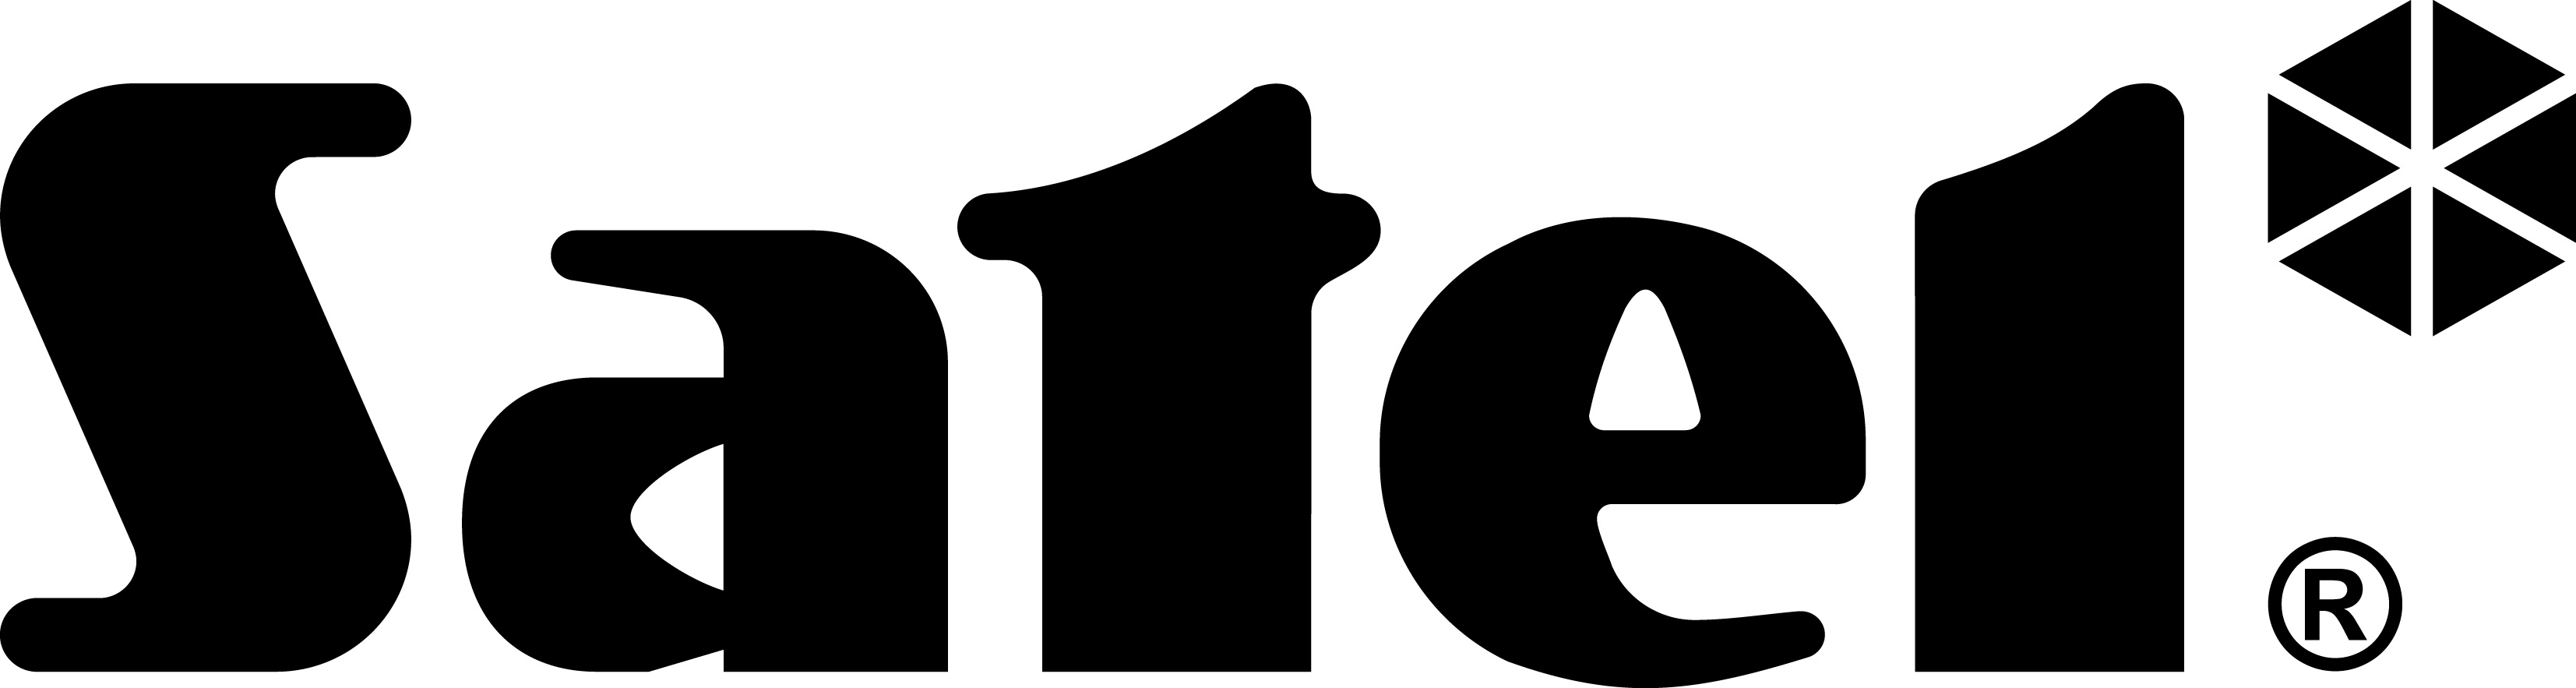 satel_logo